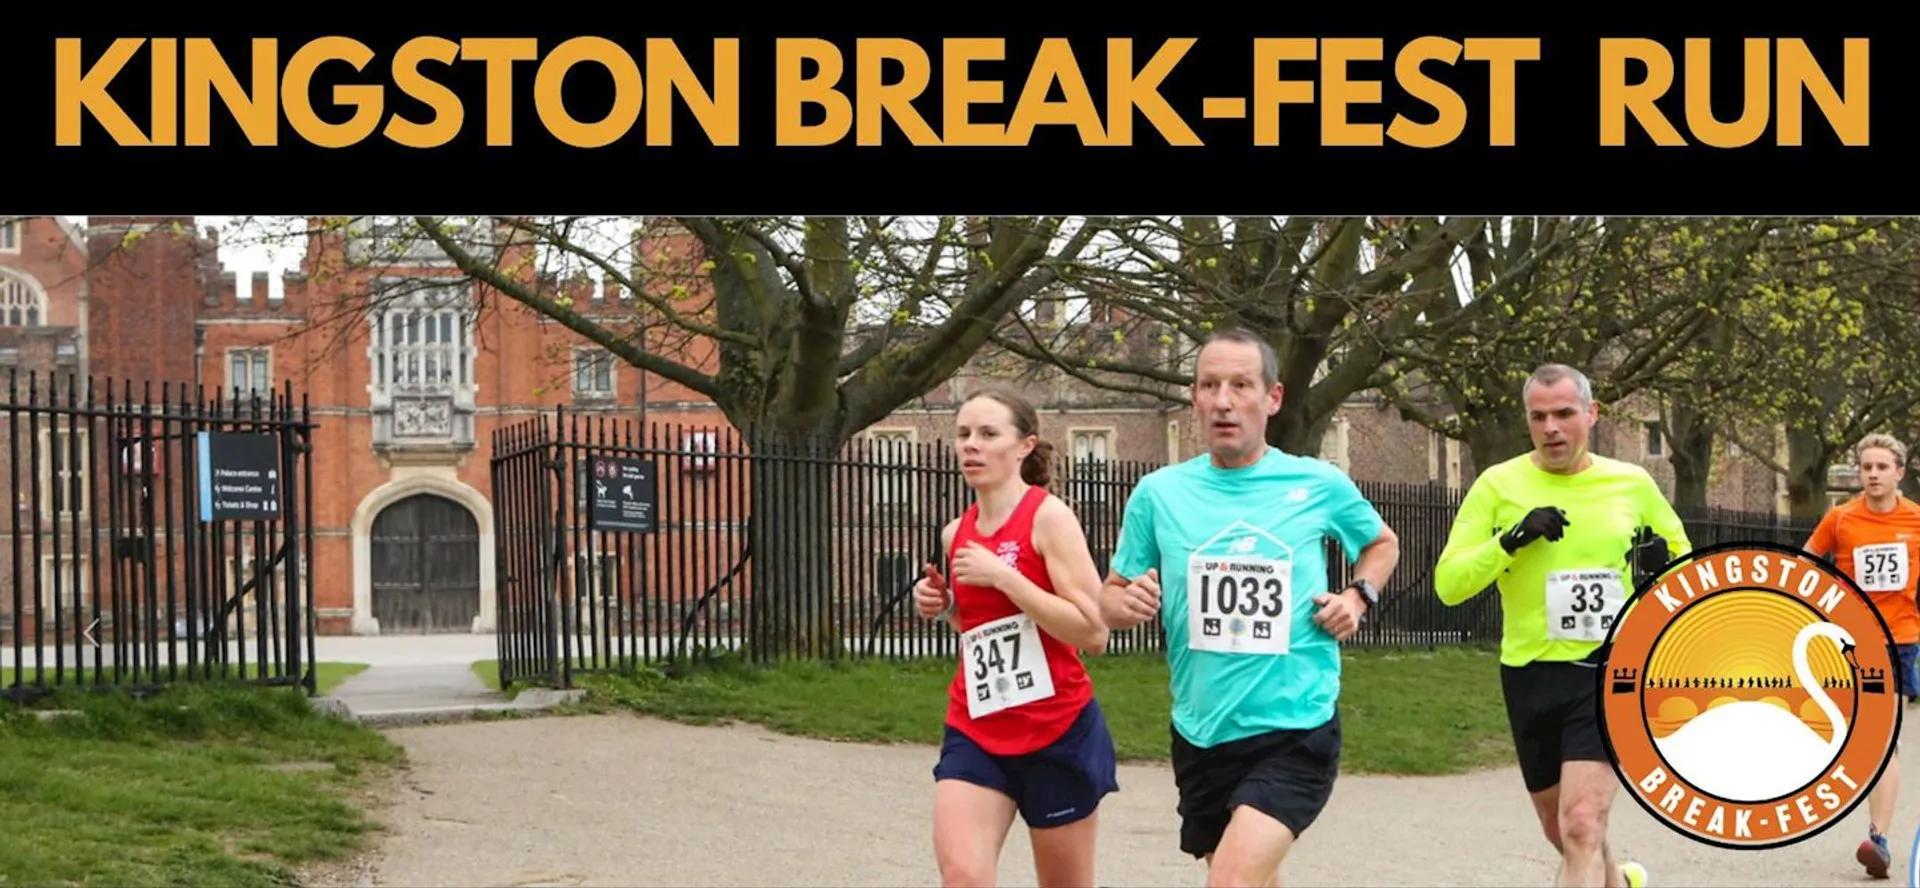 Image of Kingston Breakfest Run